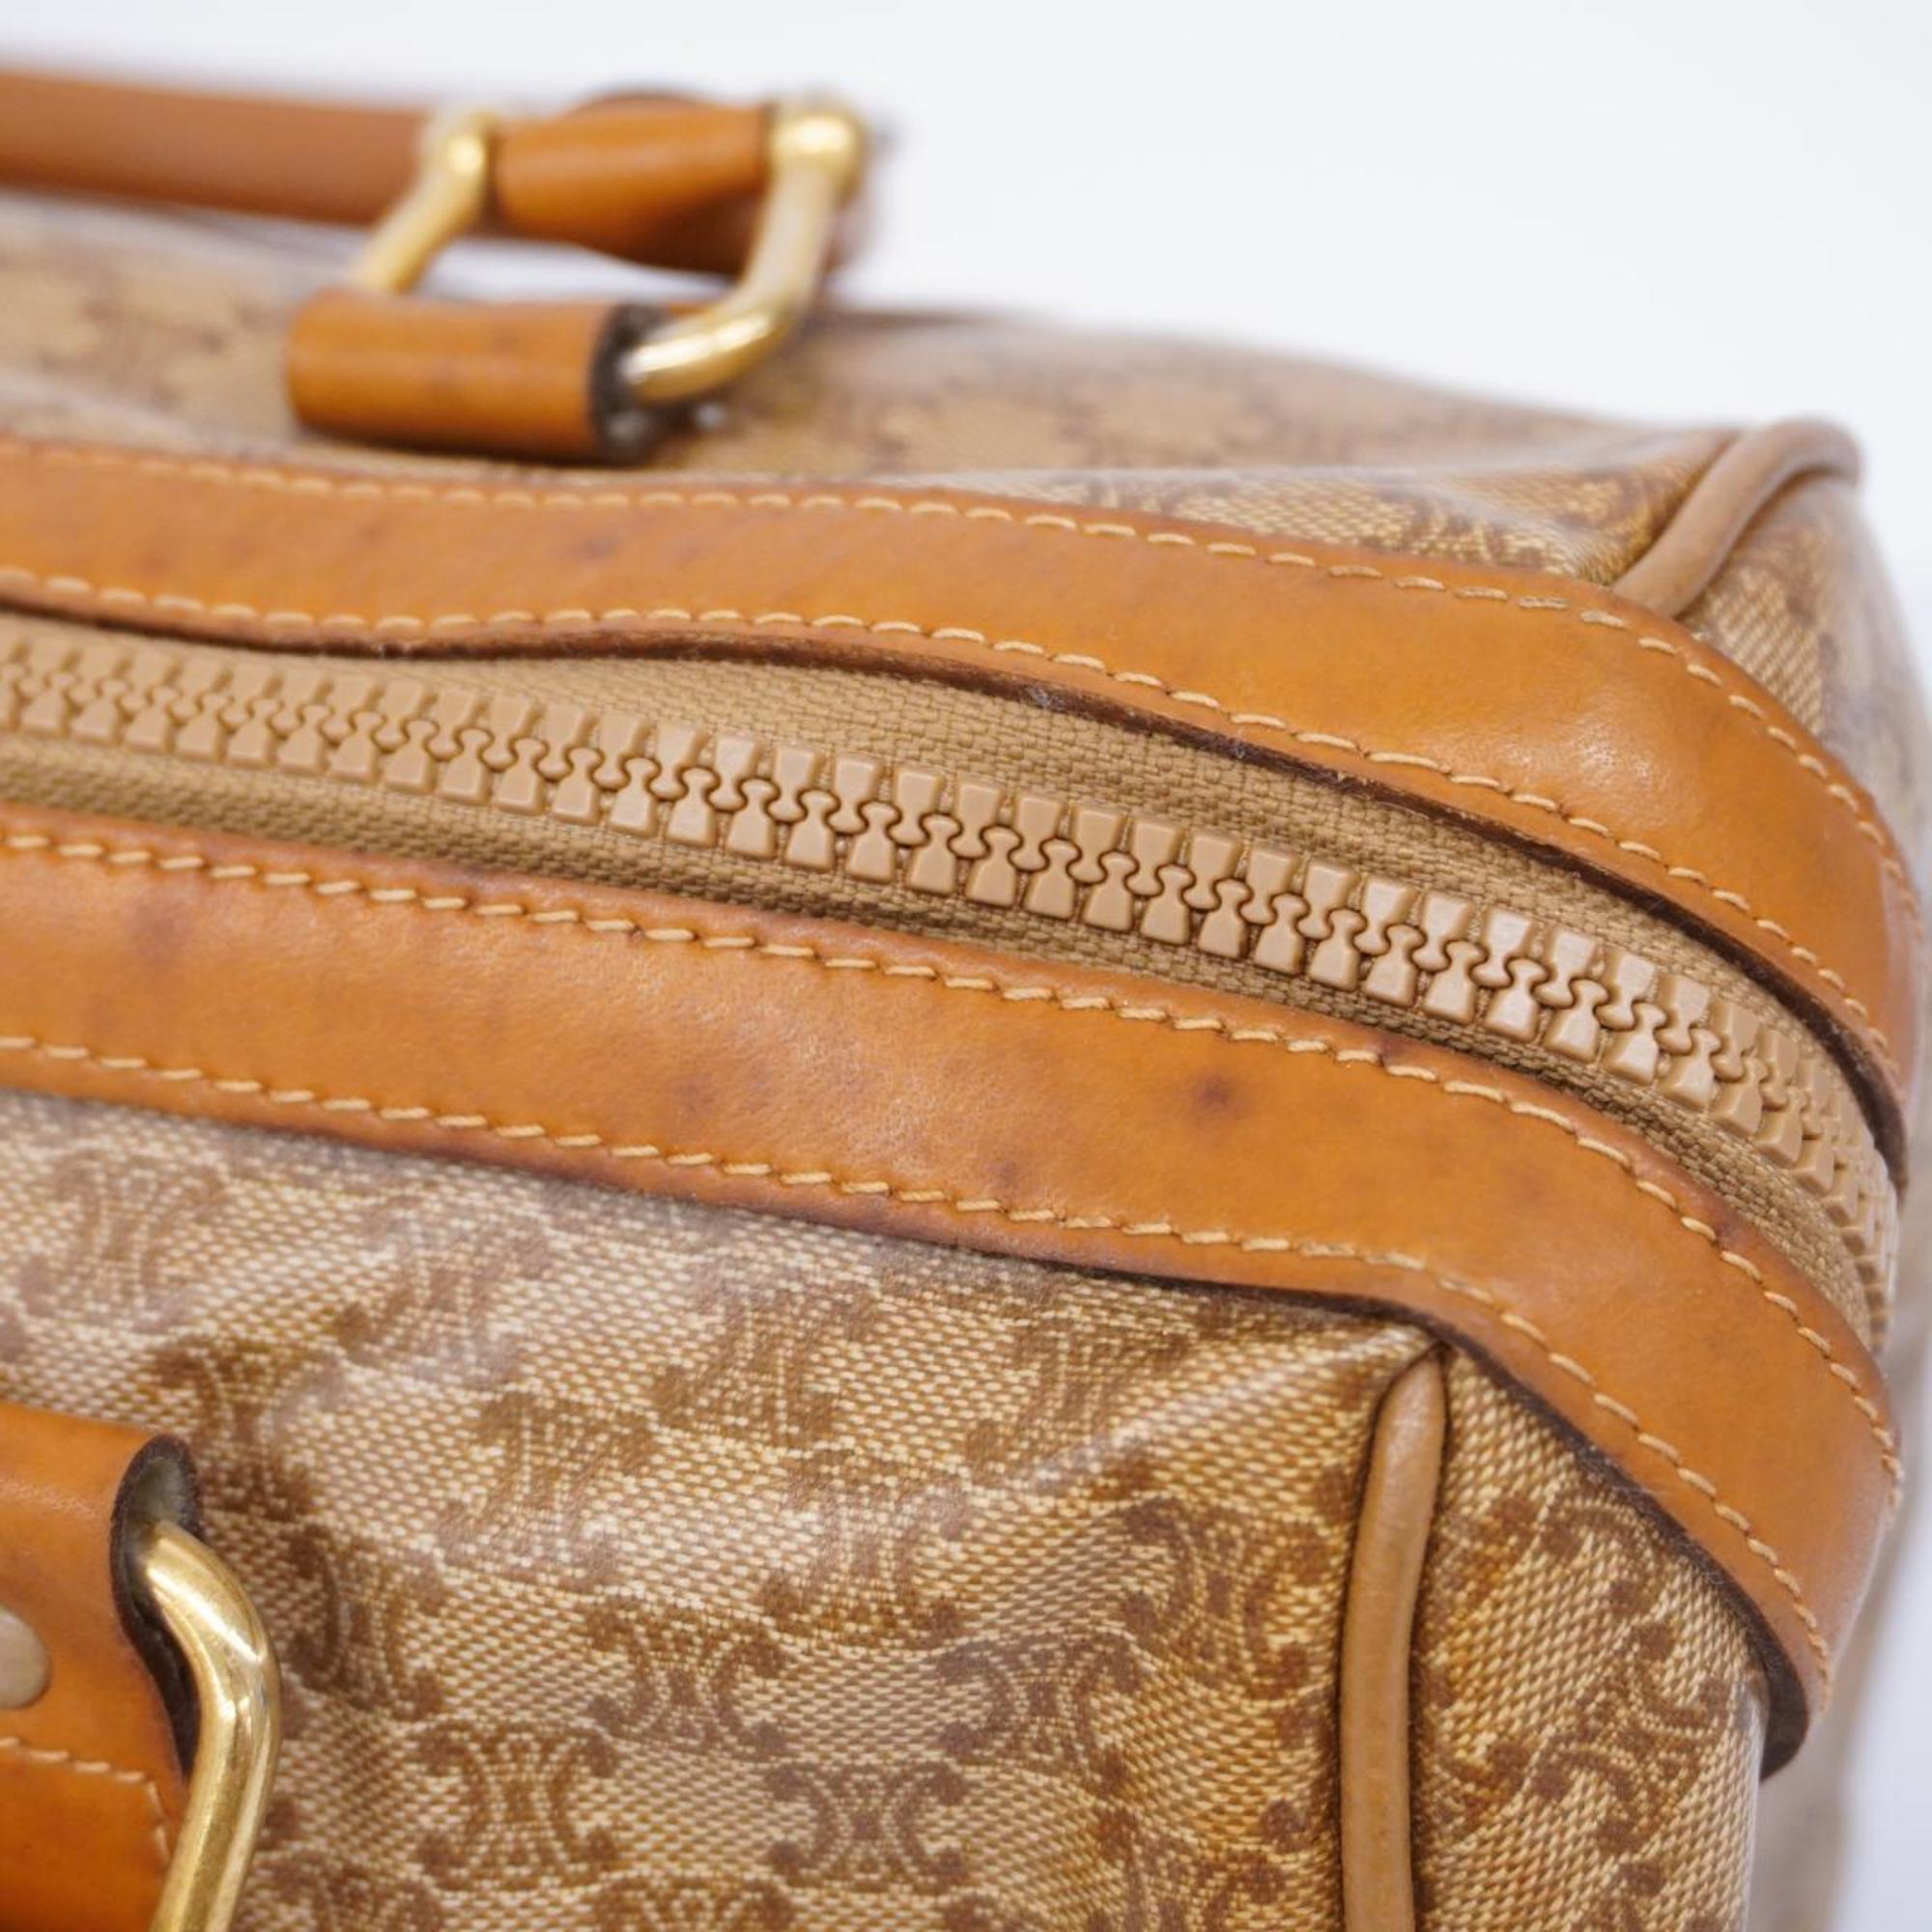 Celine handbag macadam leather beige ladies